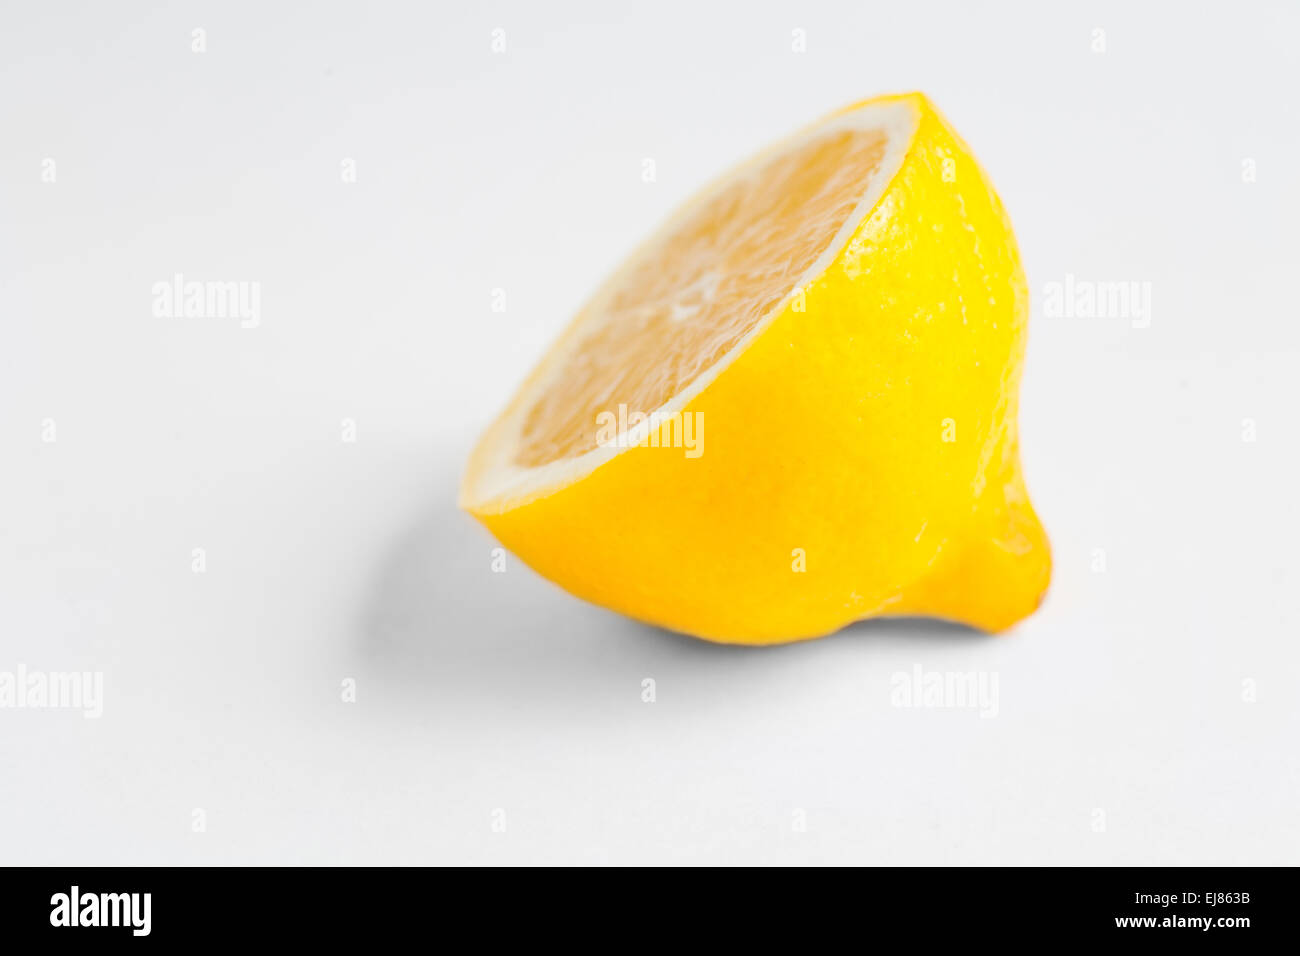 Half of a lemon on white Stock Photo